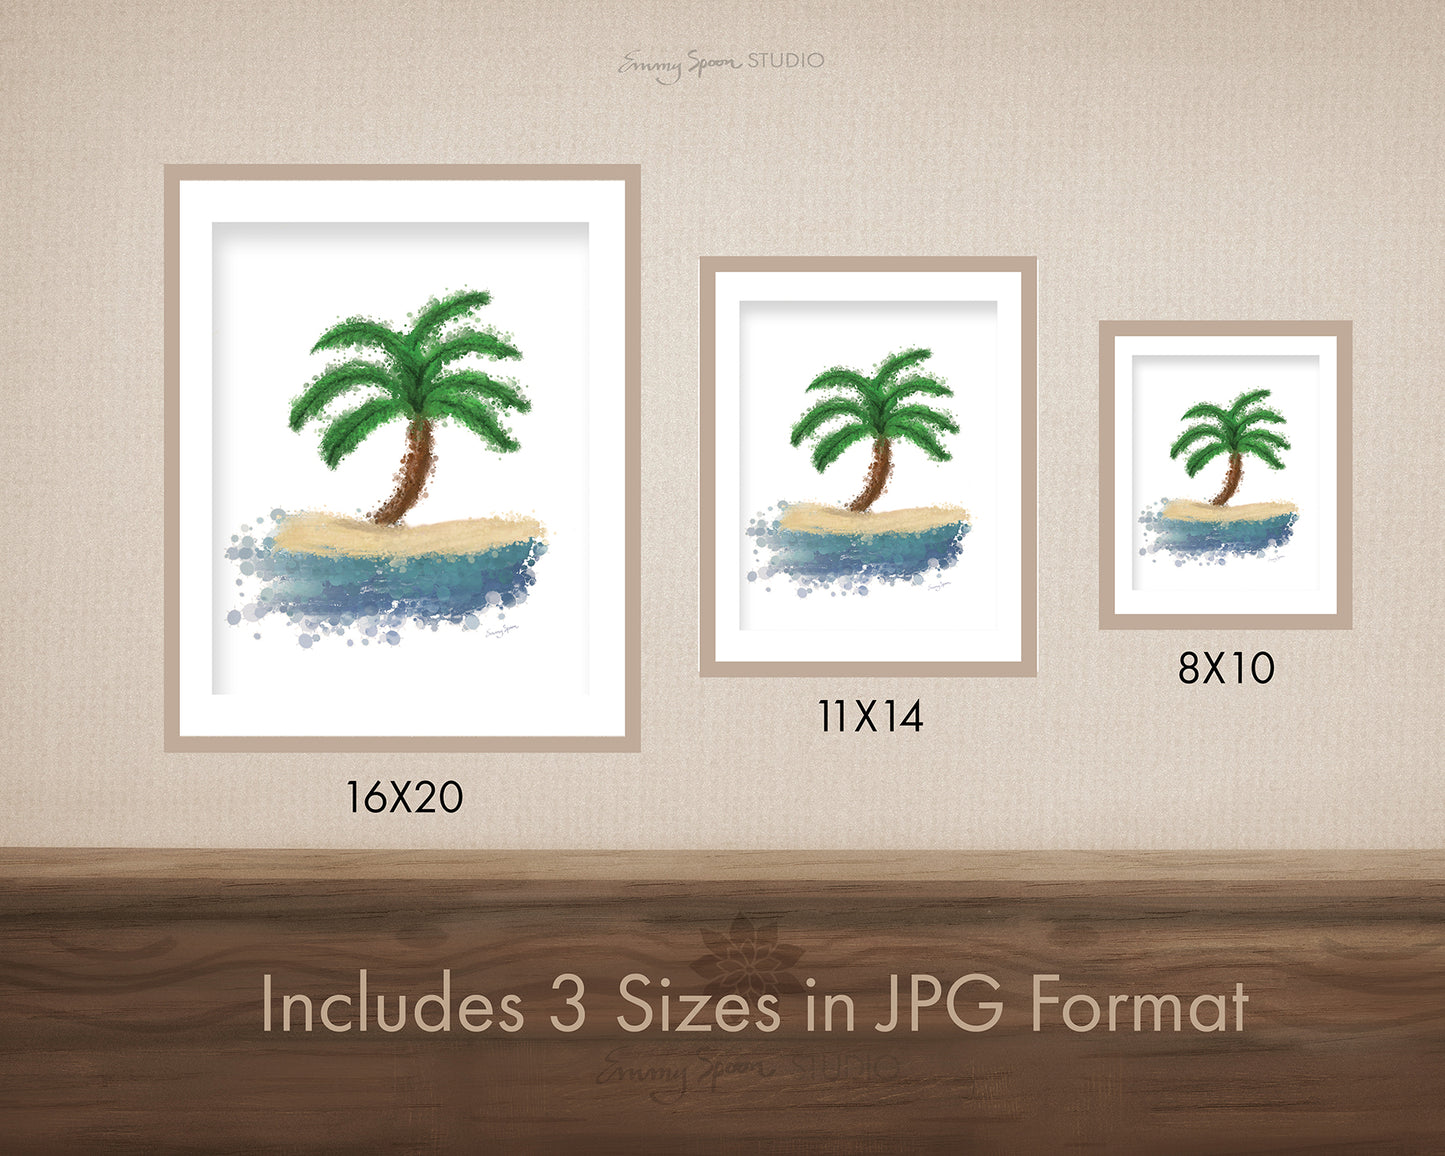 16x20, 11x14, 8x10 - Includes 3 Sizes in JPG Format, Emmy Spoon Studio